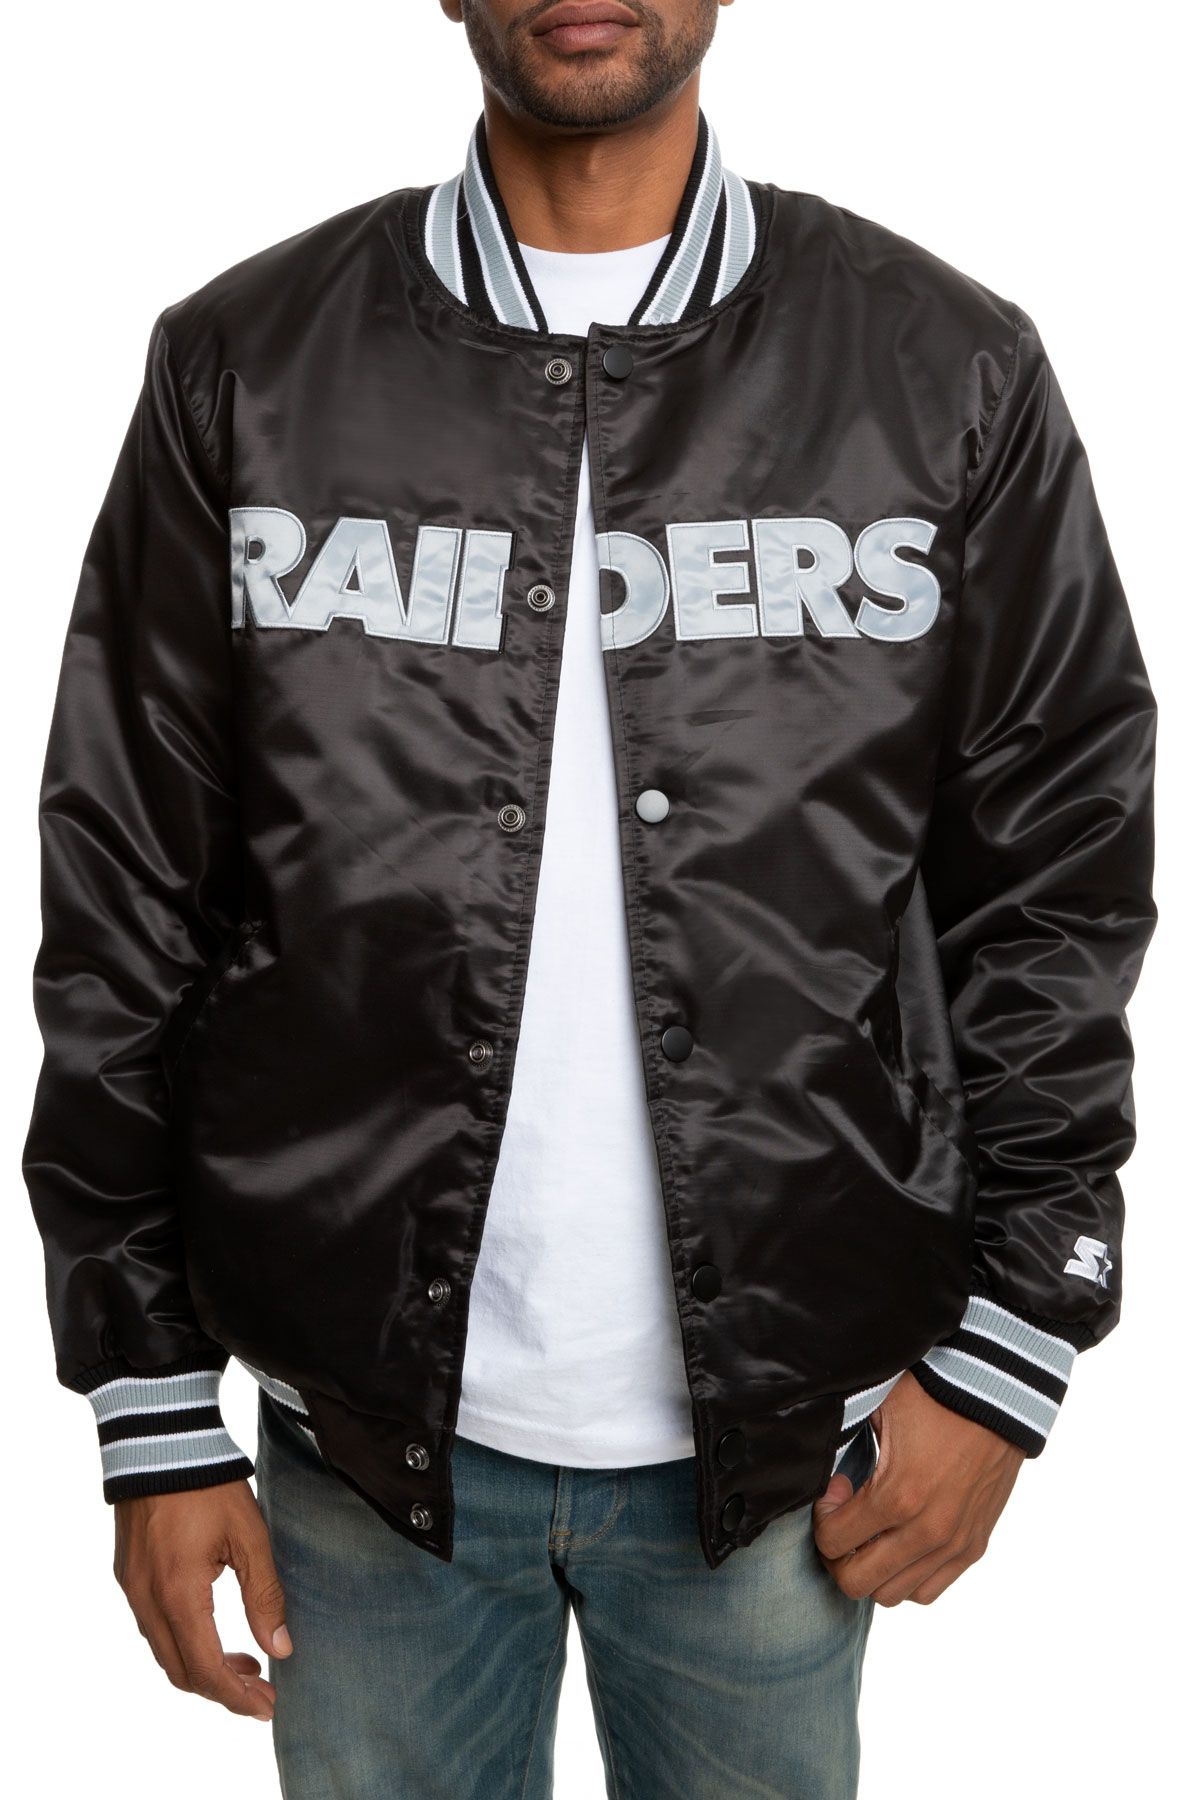 Hands In Jacket Pockets Drawing ~ Oakland Raiders Varsity Jacket ...